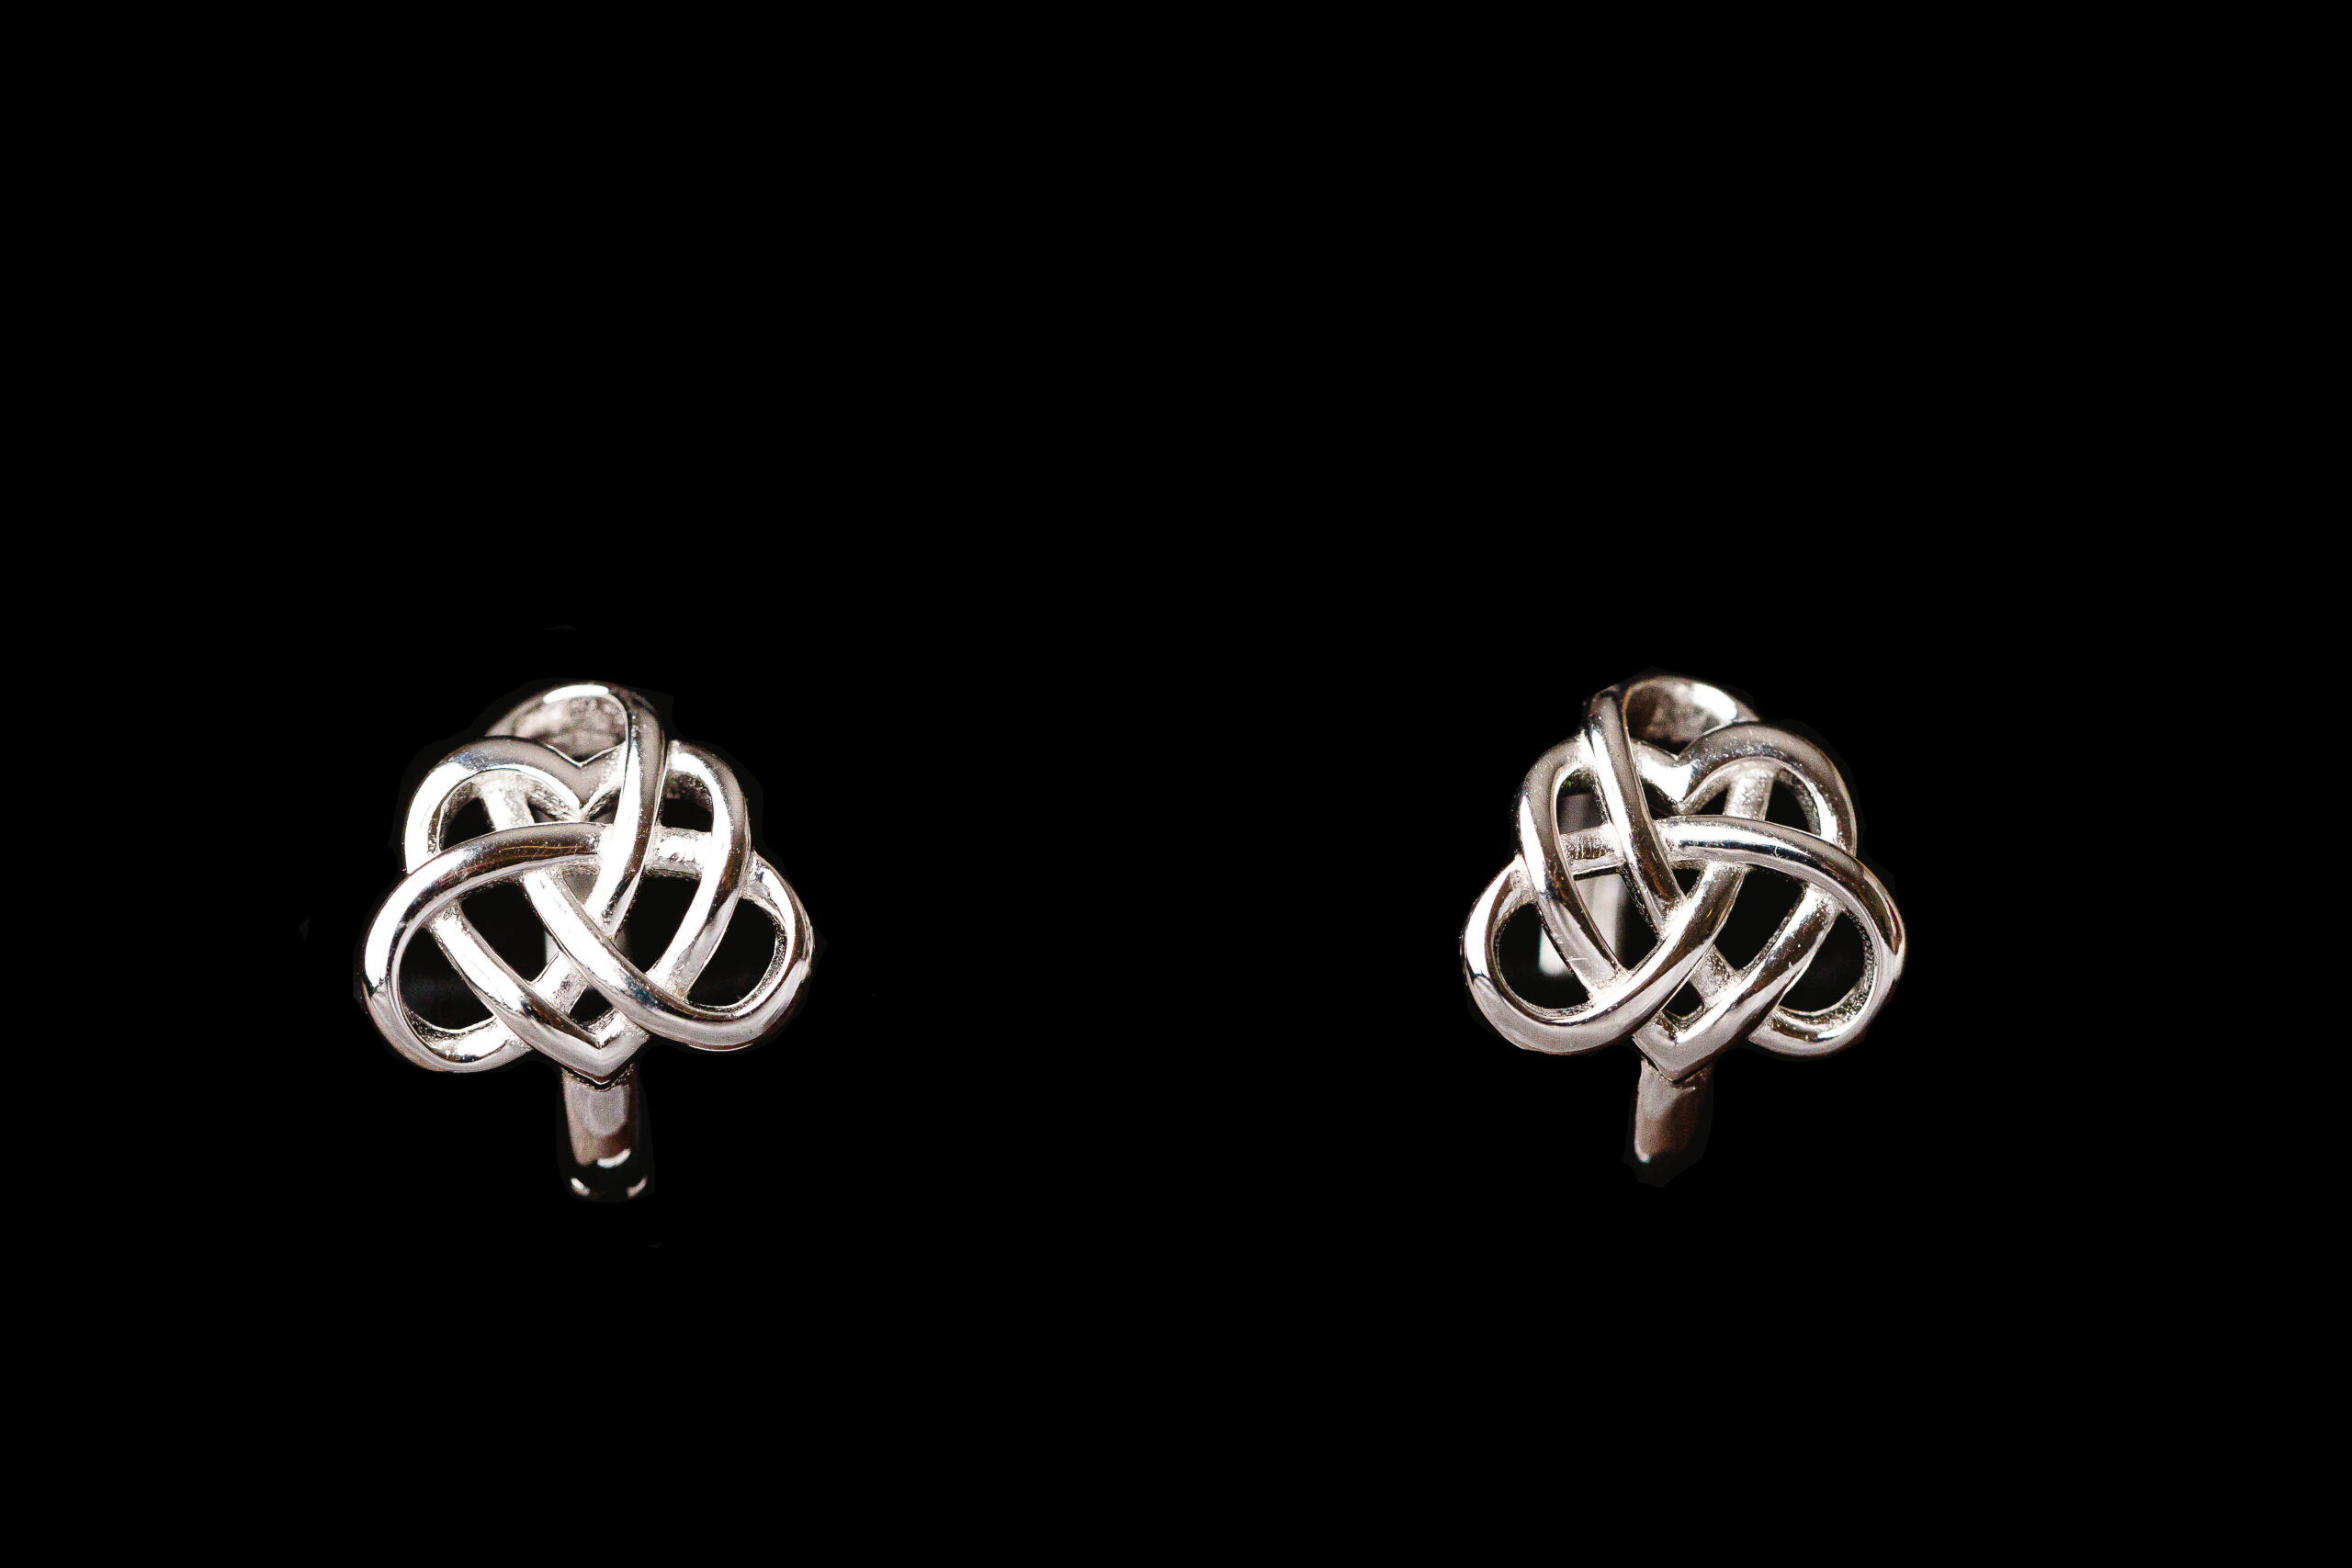 Minimalist Twisted Small Hoop Earrings S925 Sterling Silver Braided Celtic Love Knot Huggie Round Hoops Earring 20mm Fashion Jewelry for Women Girls Sensitive Ears